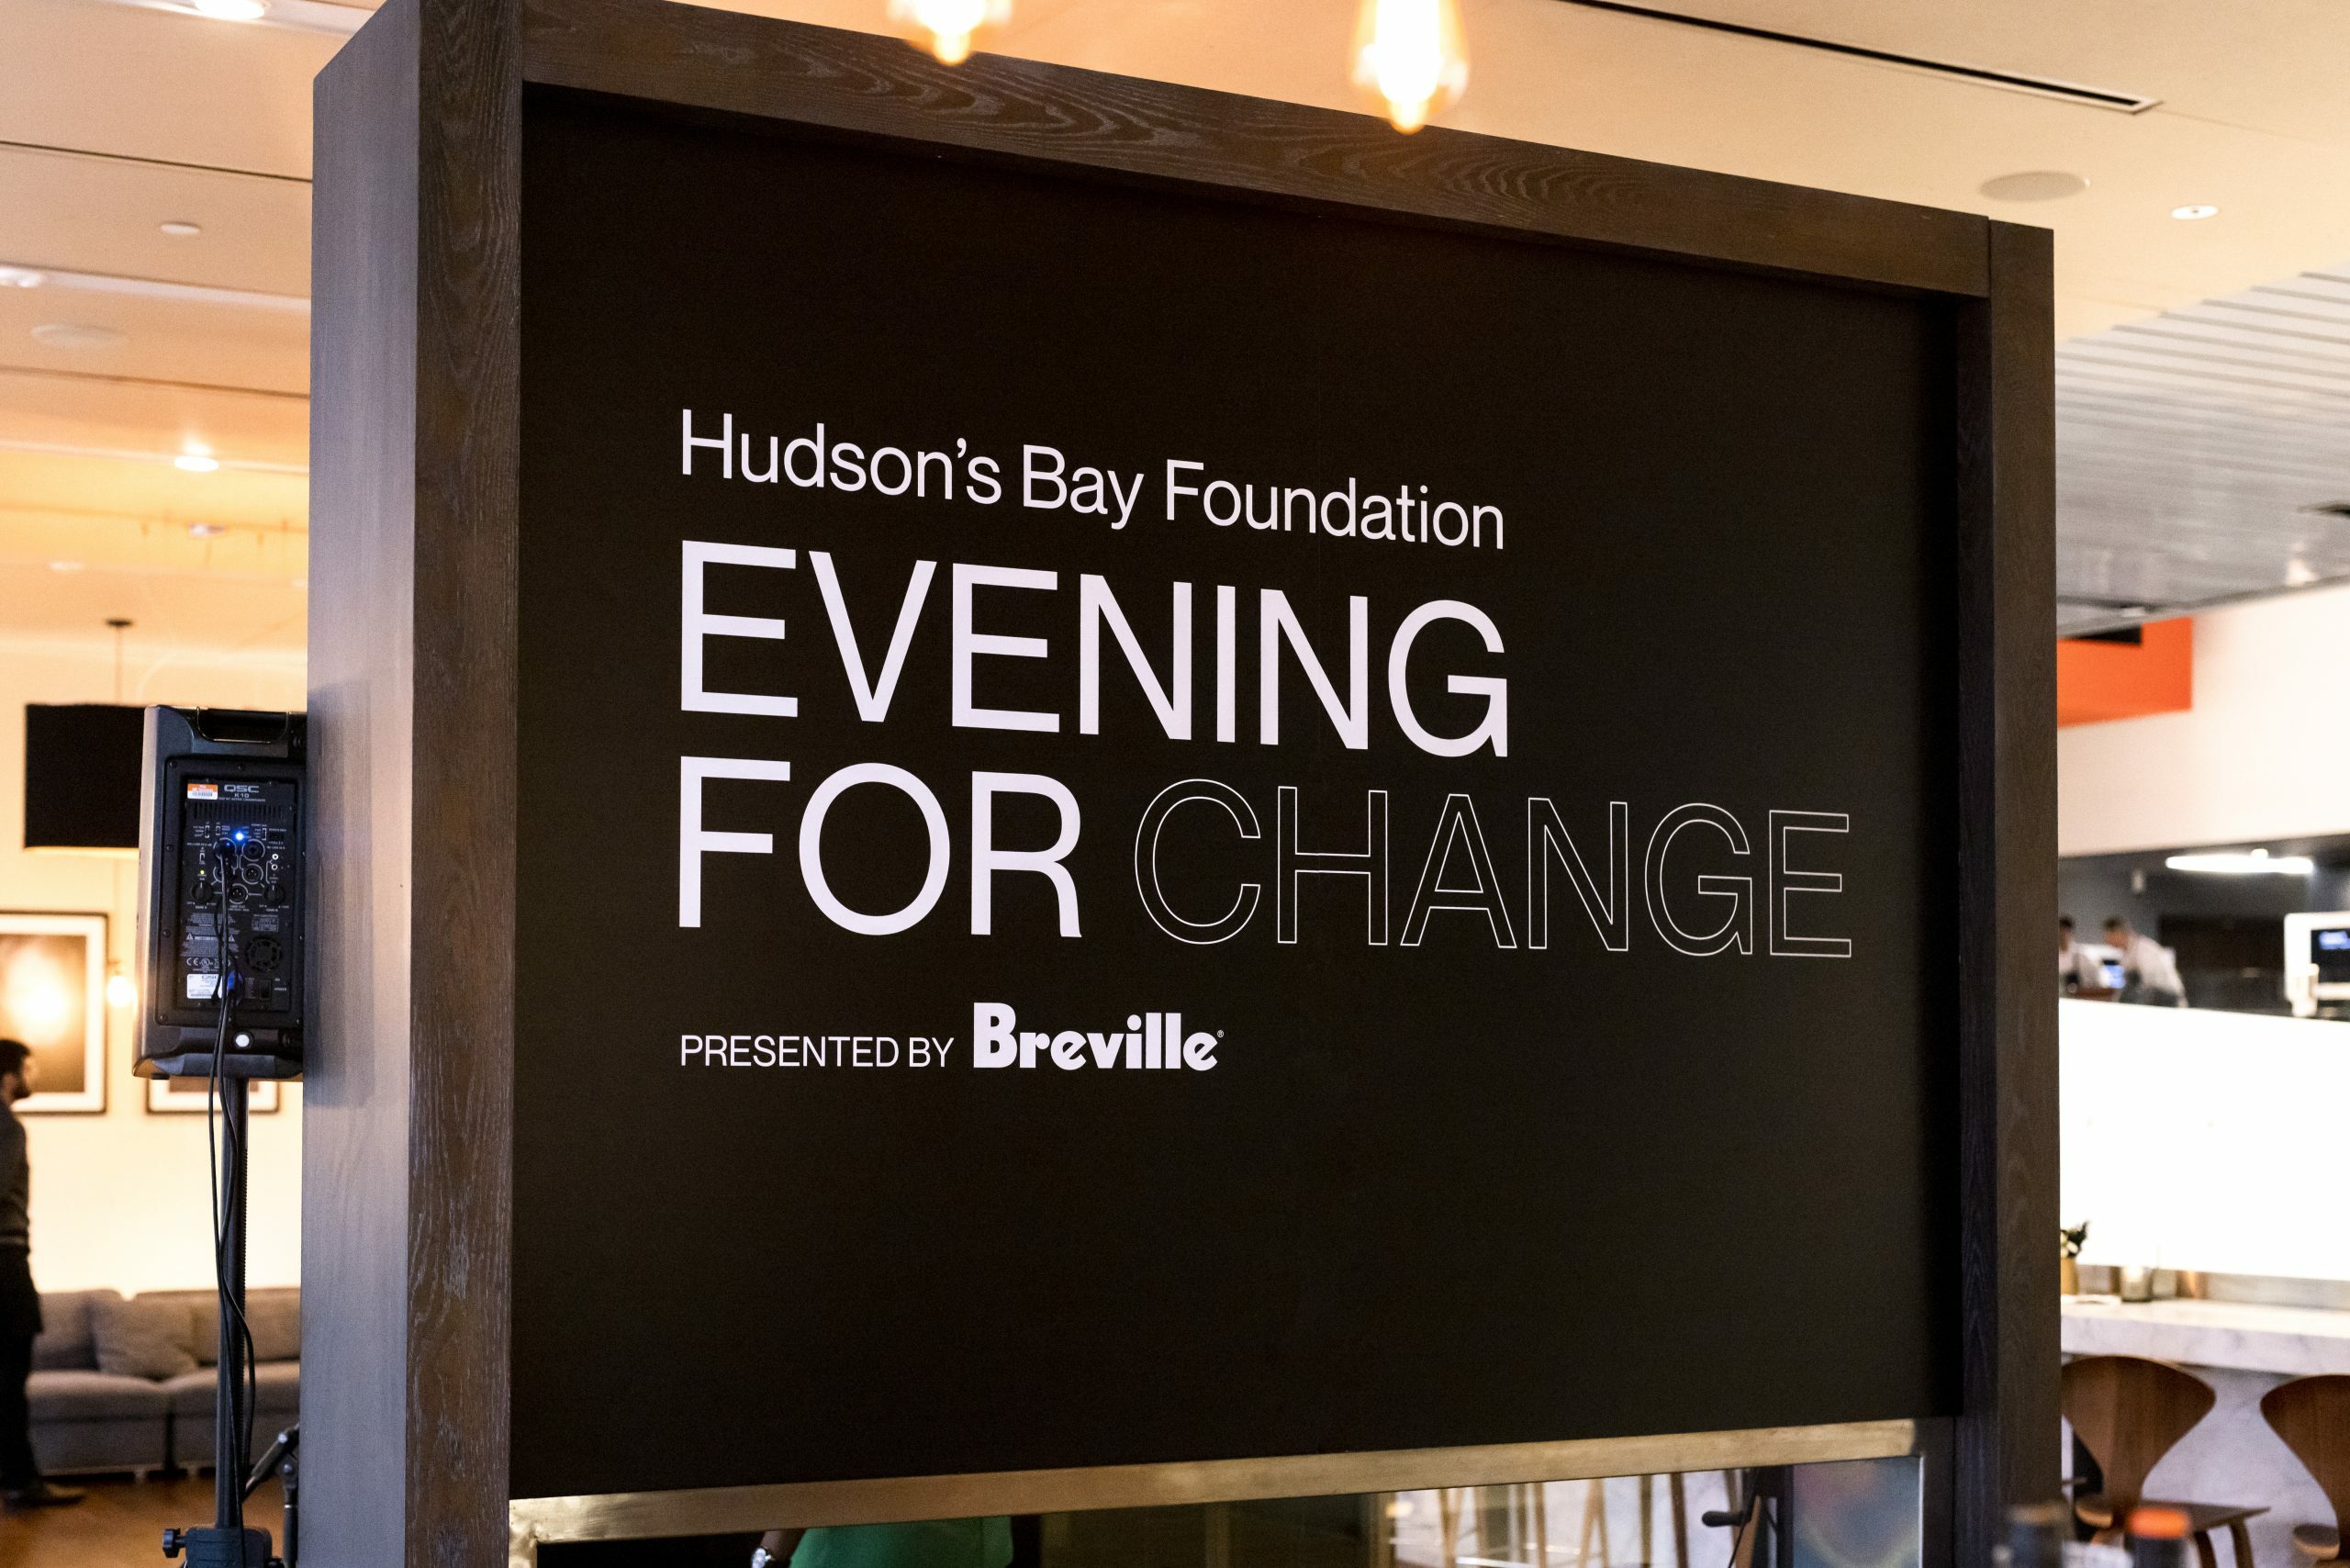 Large black signing announcing "Hudson's Bay Foundation Evening For Change - Presented by Breville"